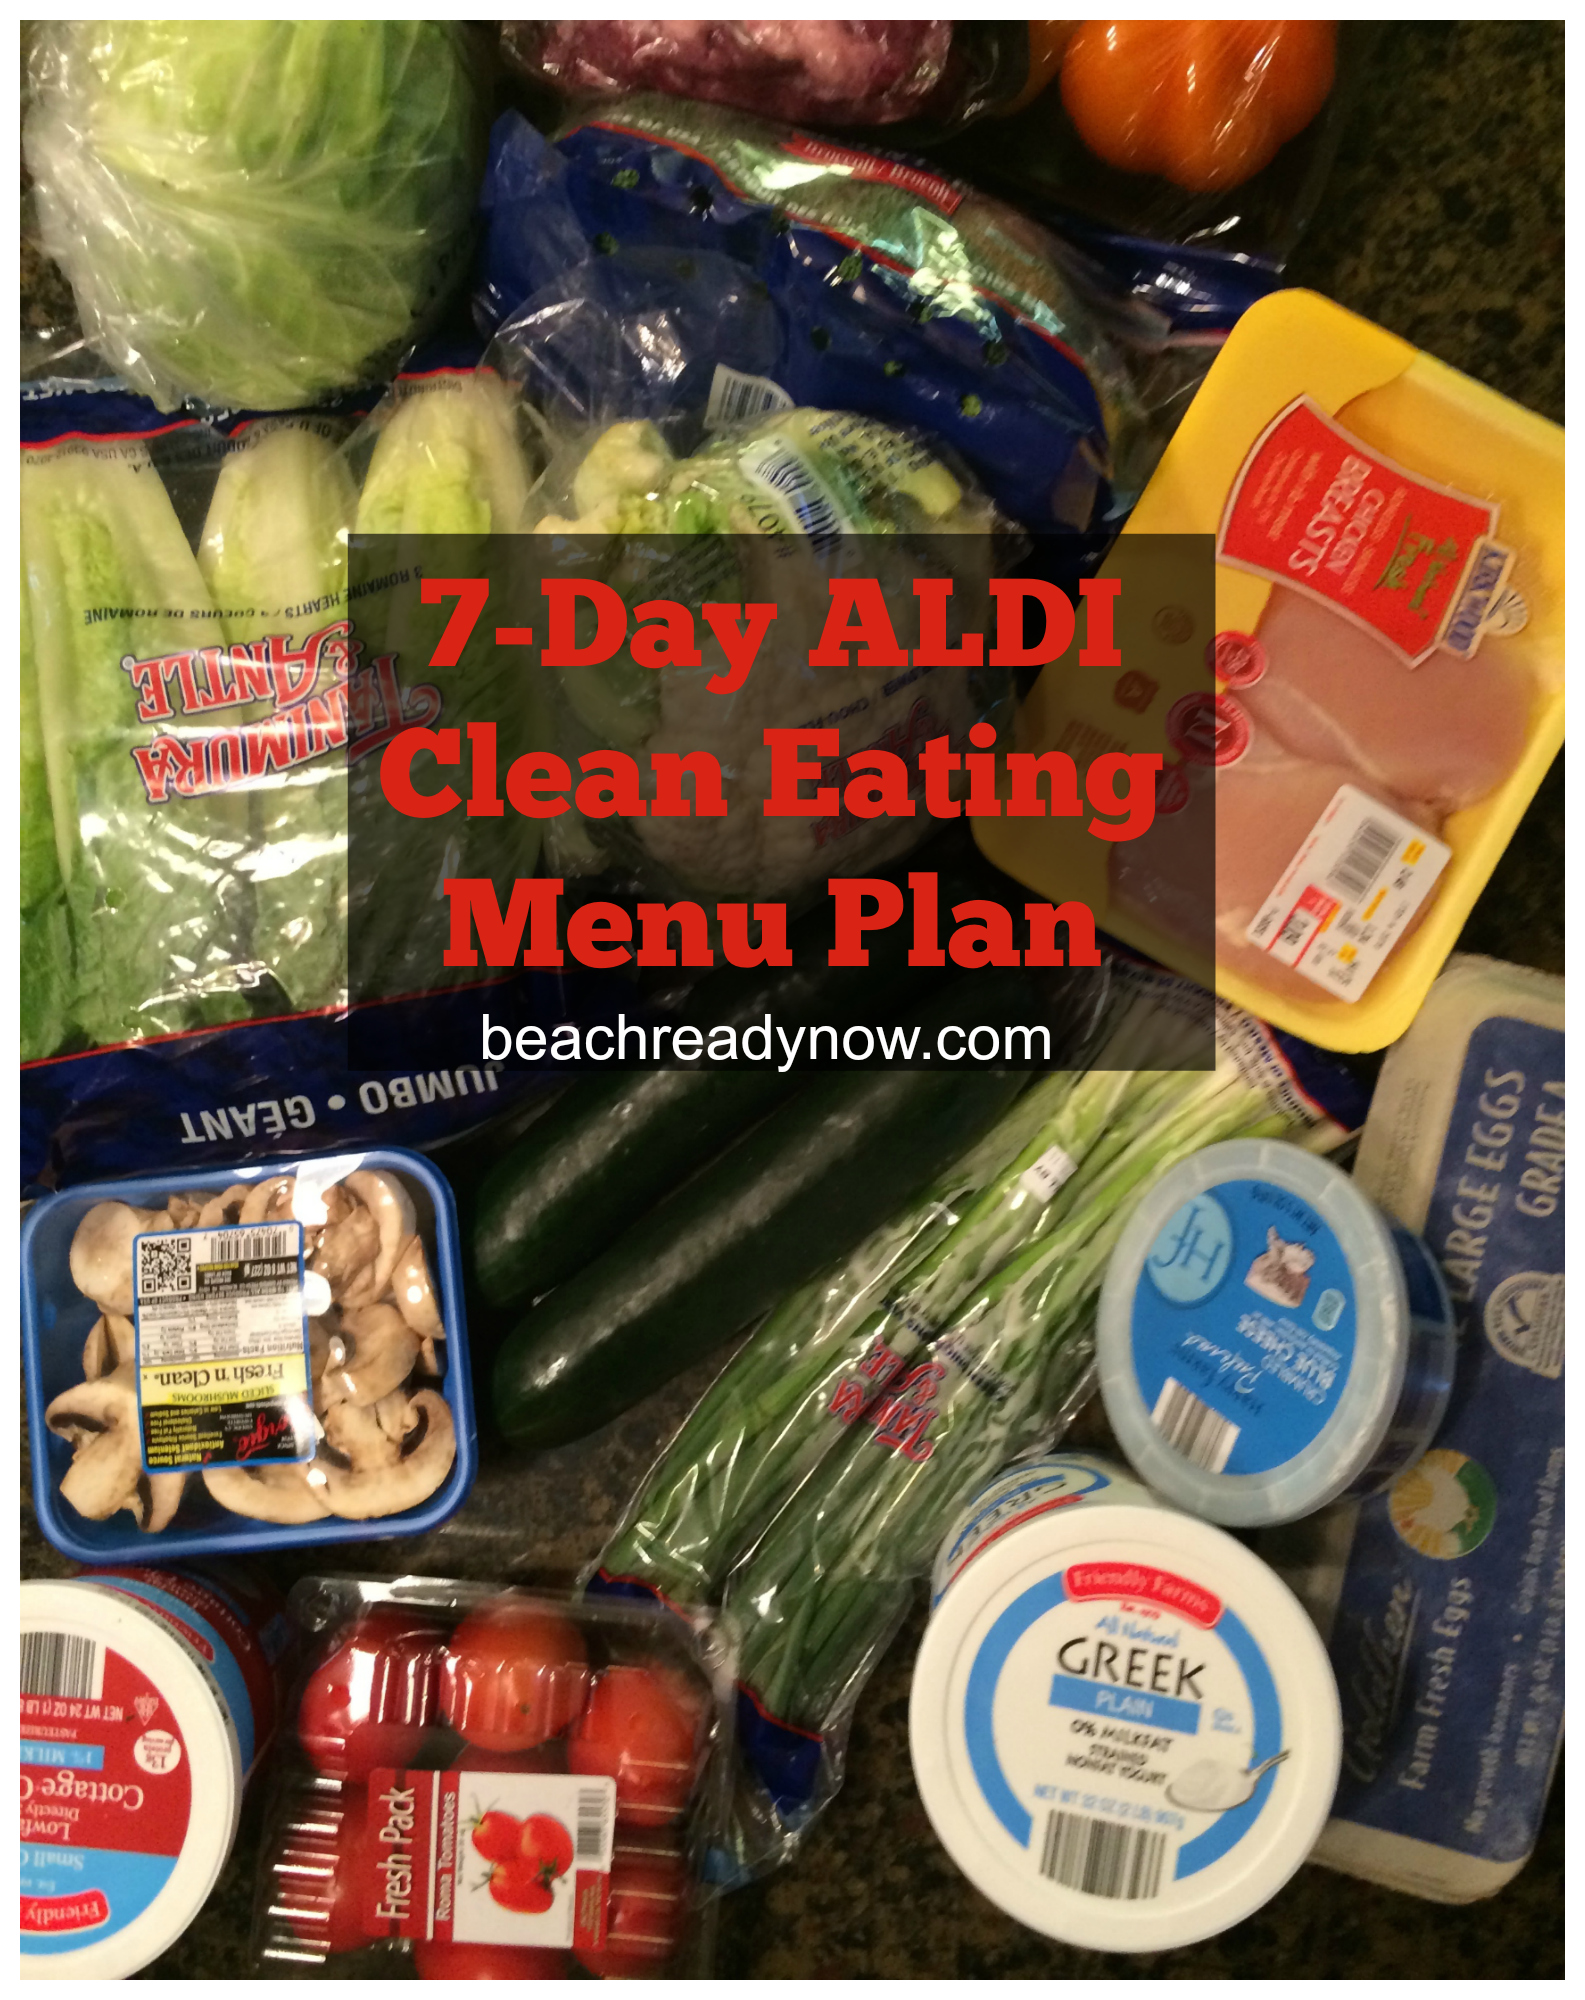 7-Day ALDI Clean Eating Menu Plan